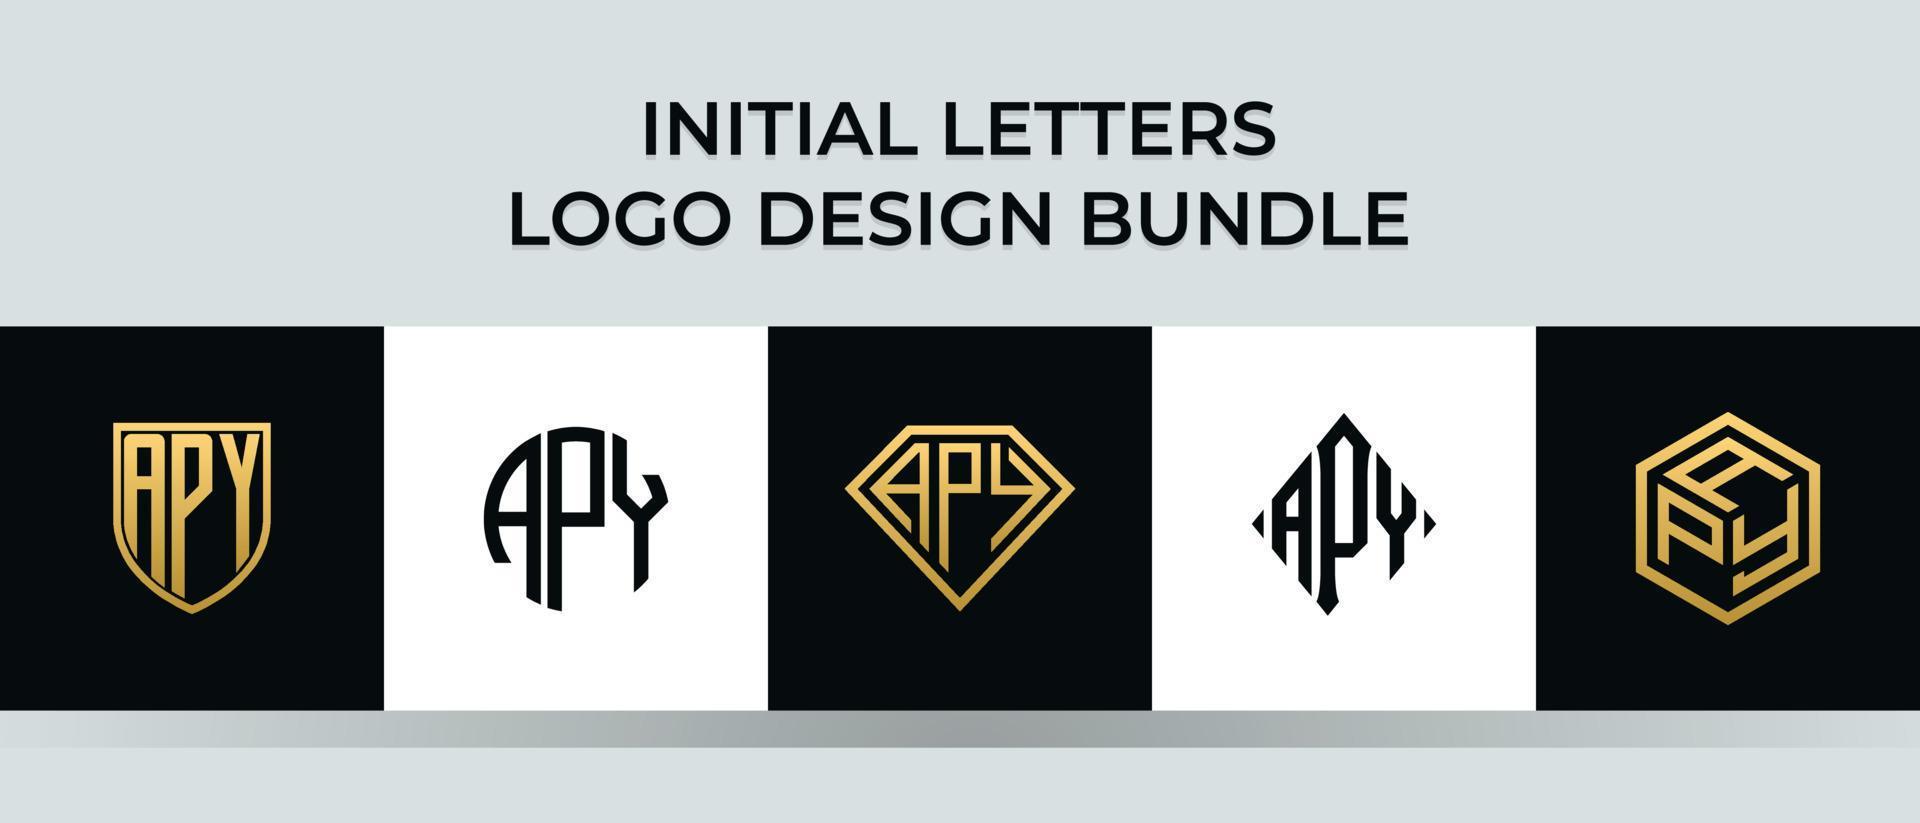 Initial letters APY logo designs Bundle vector